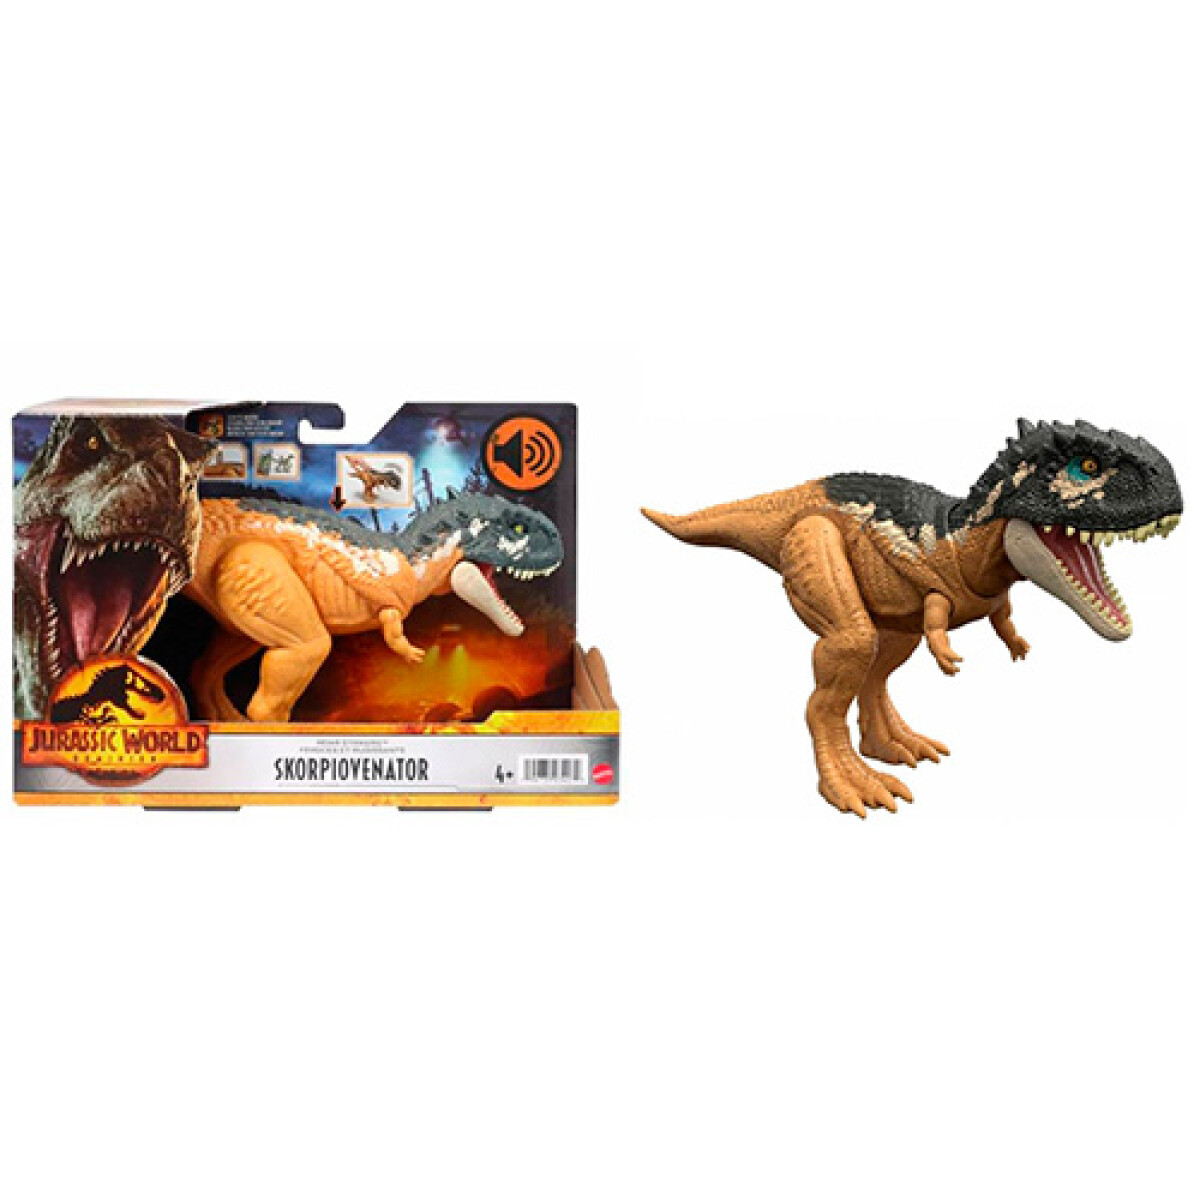 Dinosaurio Jurassic World Skorpiovenator Ruge y Ataca - 001 